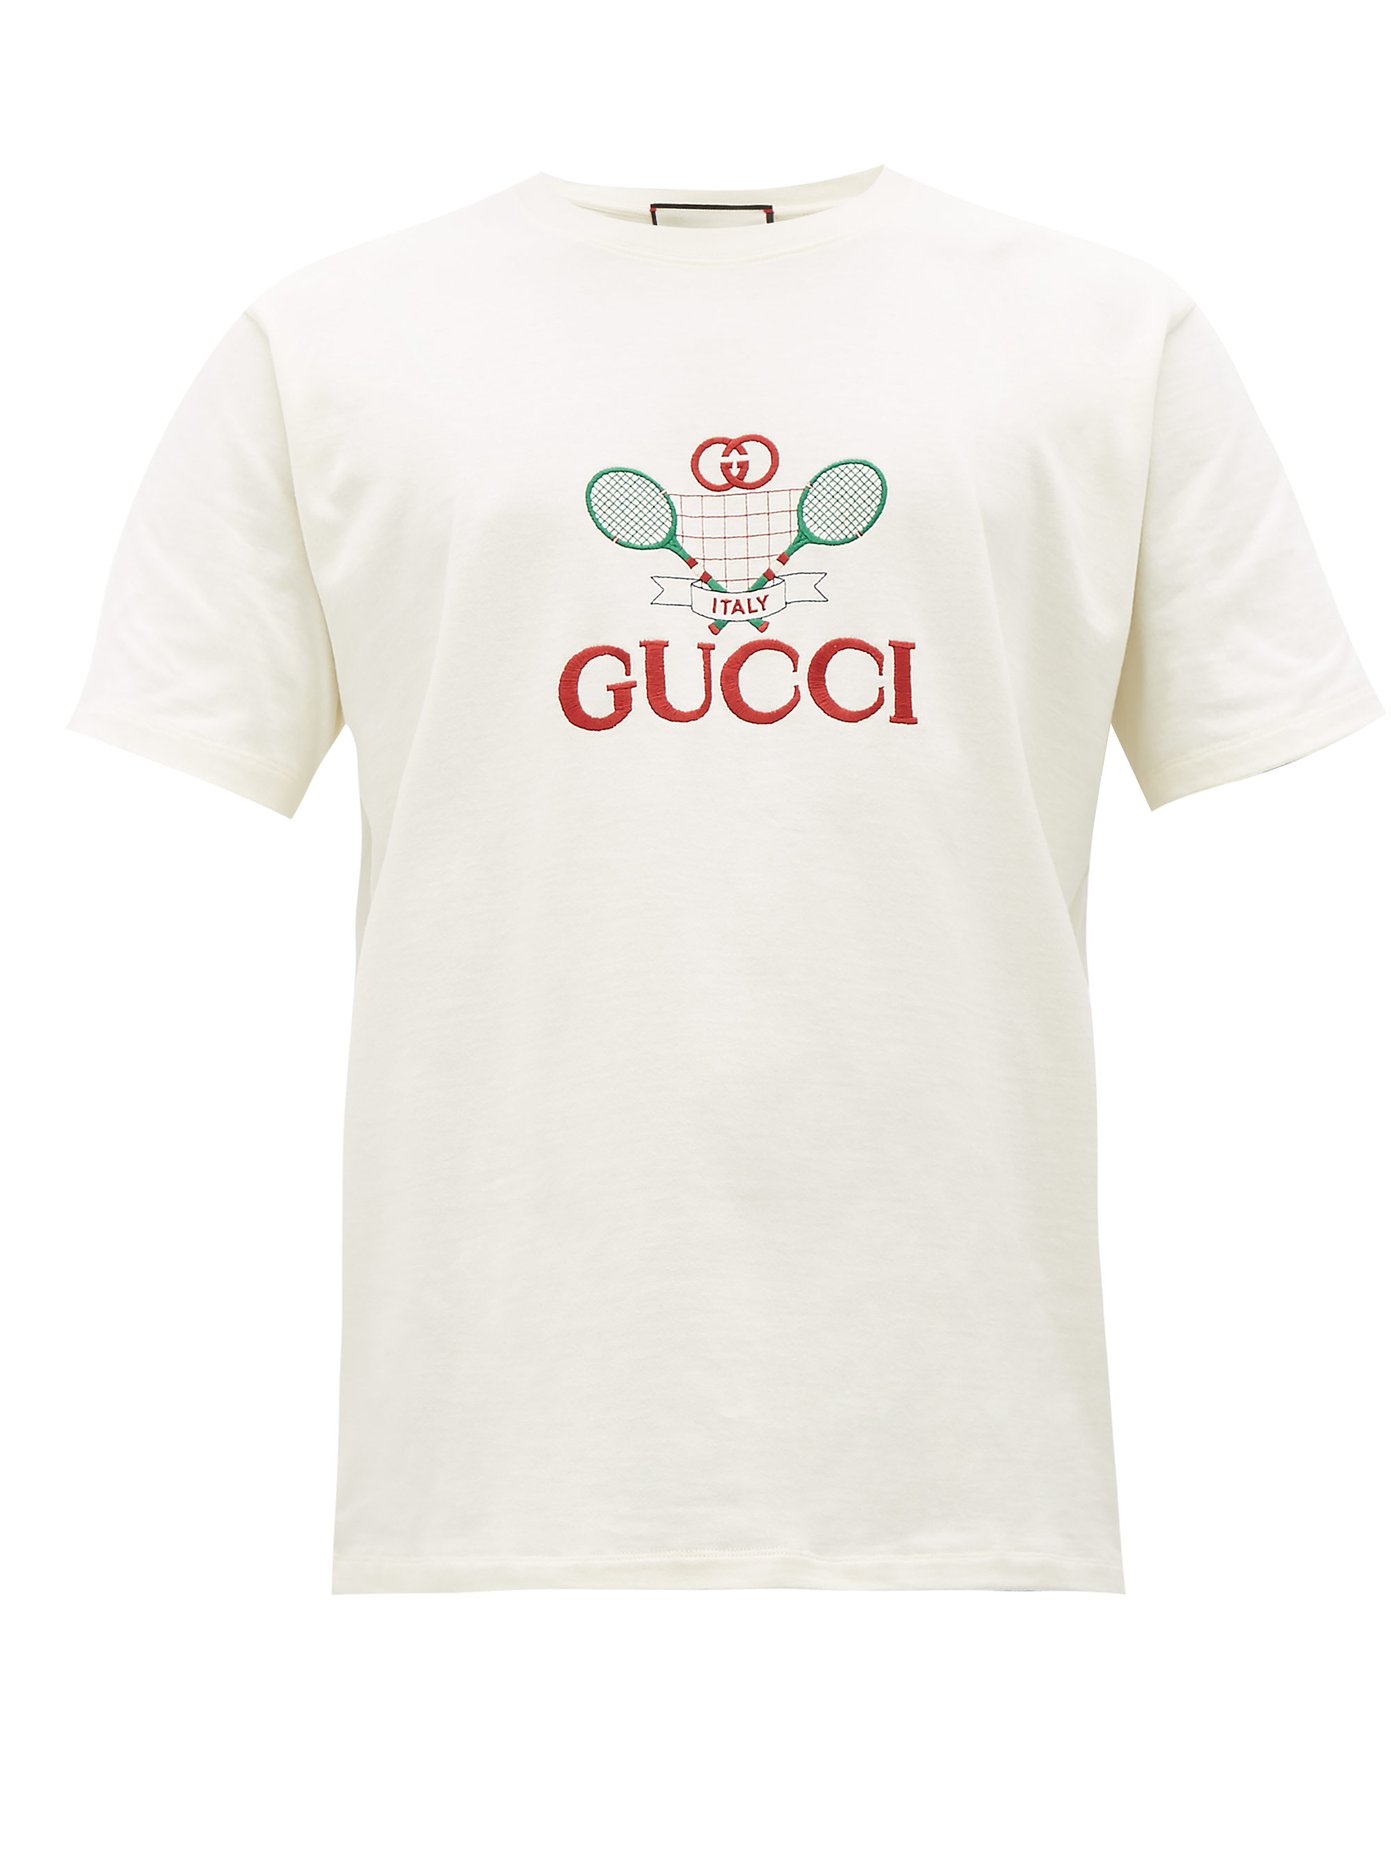 gucci tennis shirt